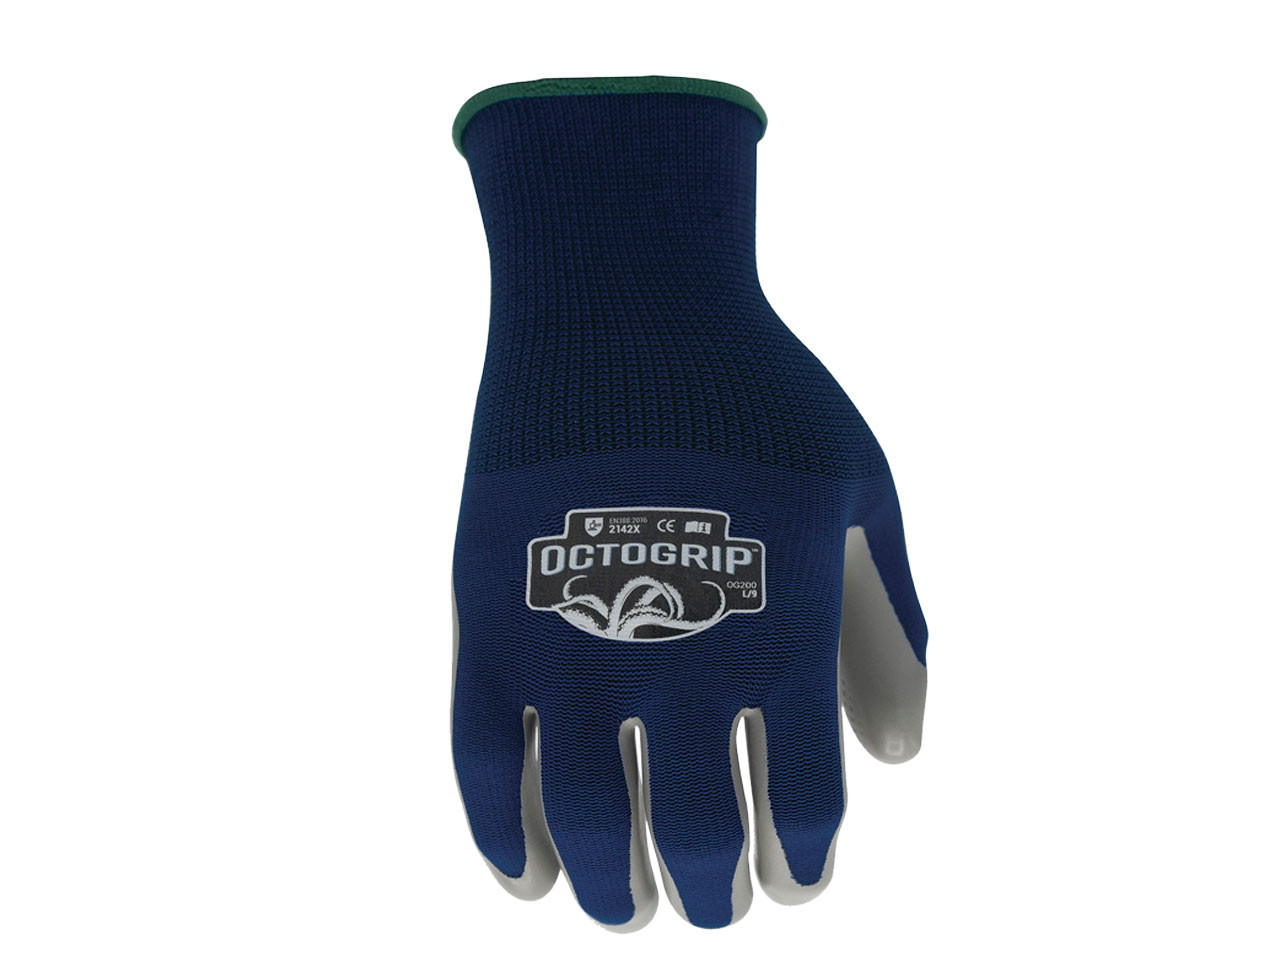 Octogrip OG200 Gloves - Pair - XL